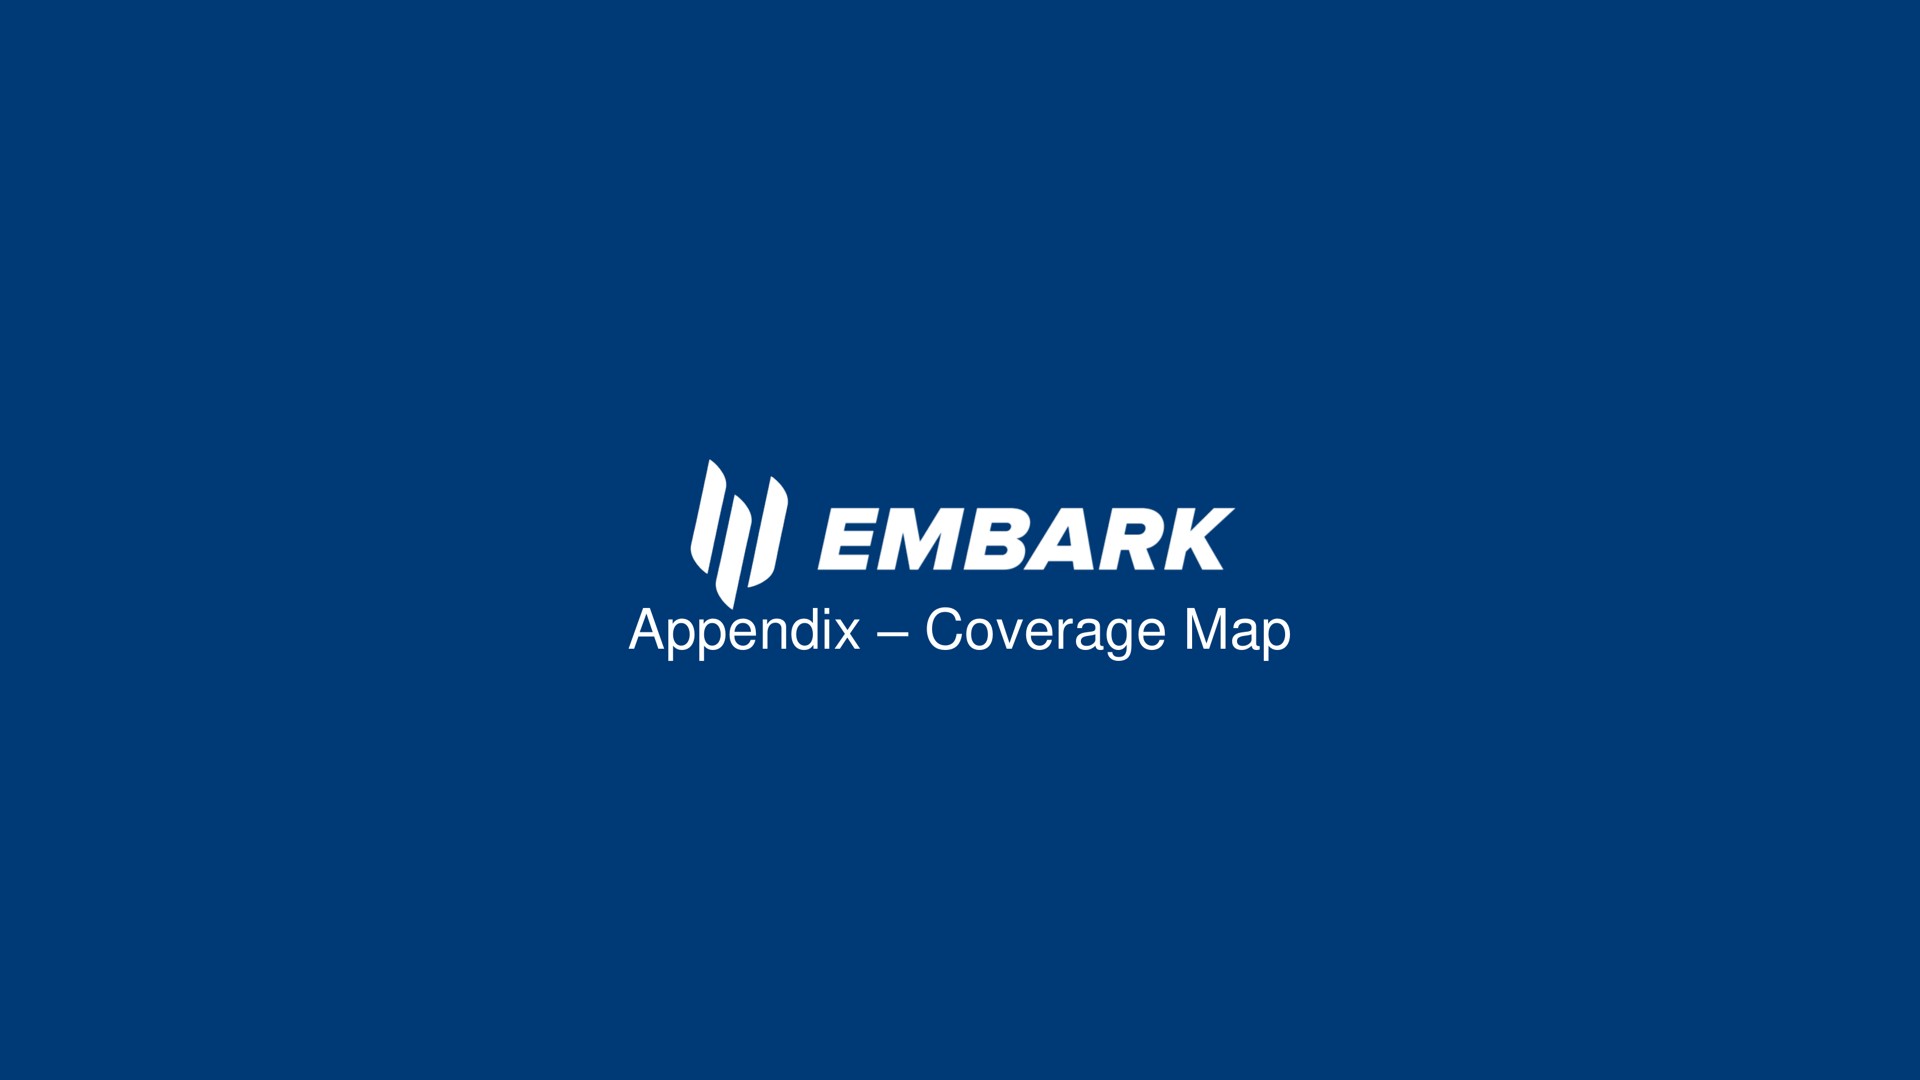 appendix coverage map embark | Embark